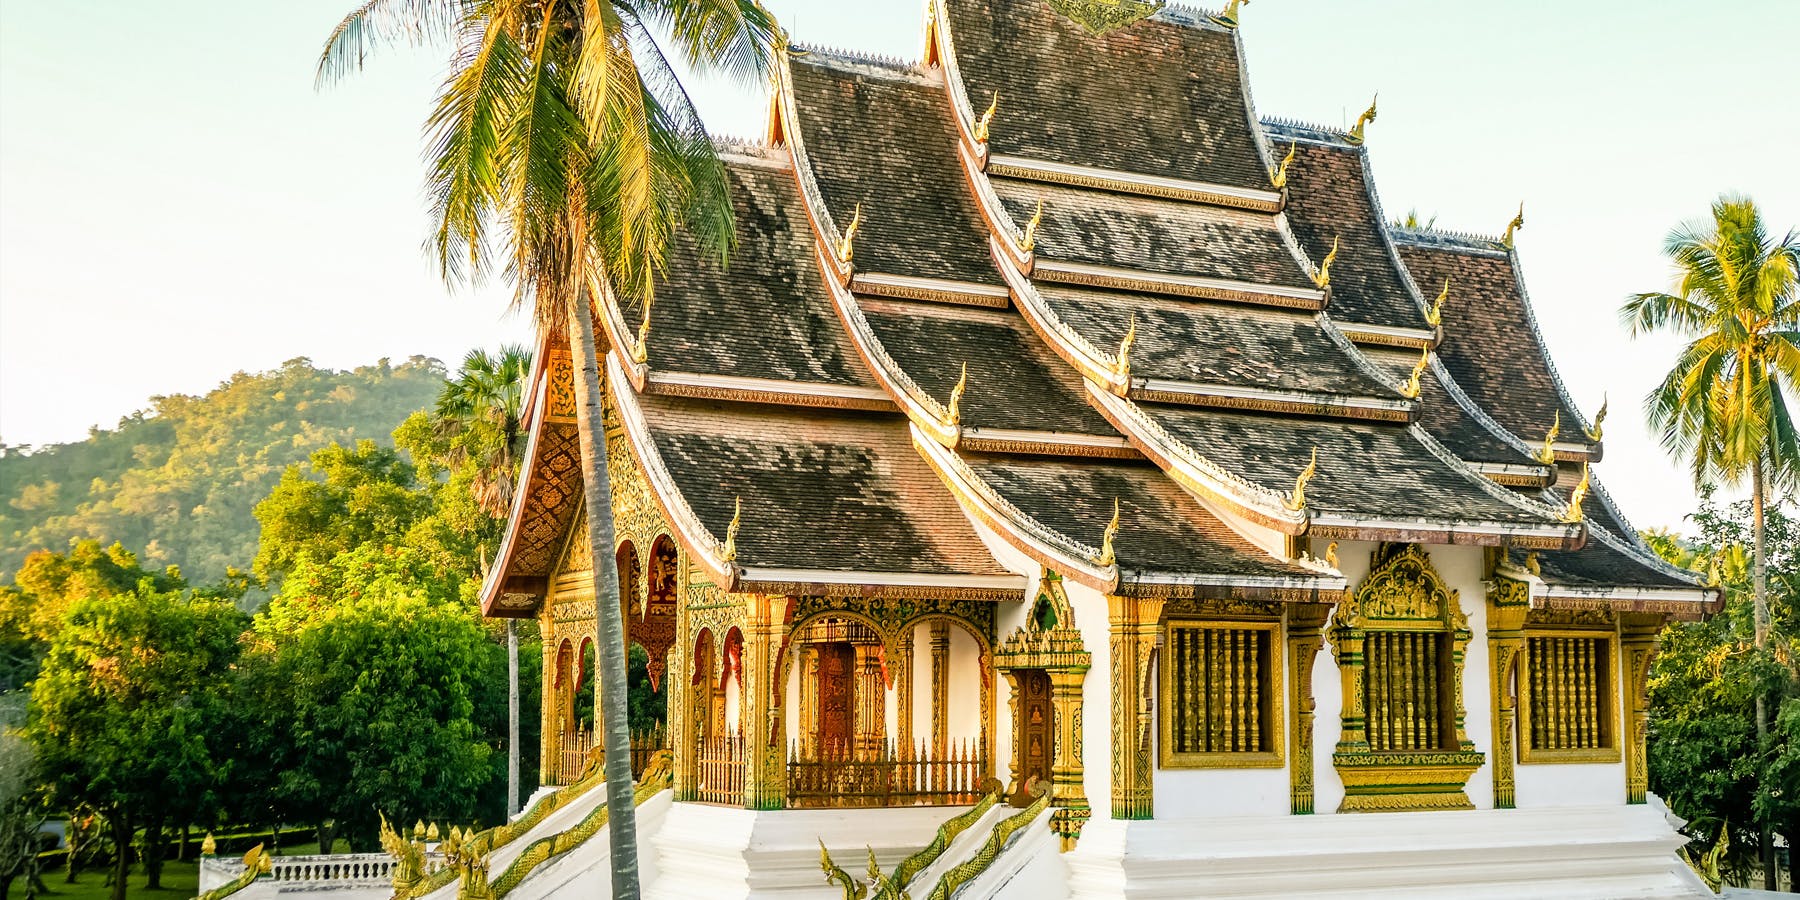 Luxury Honeymoons in Laos